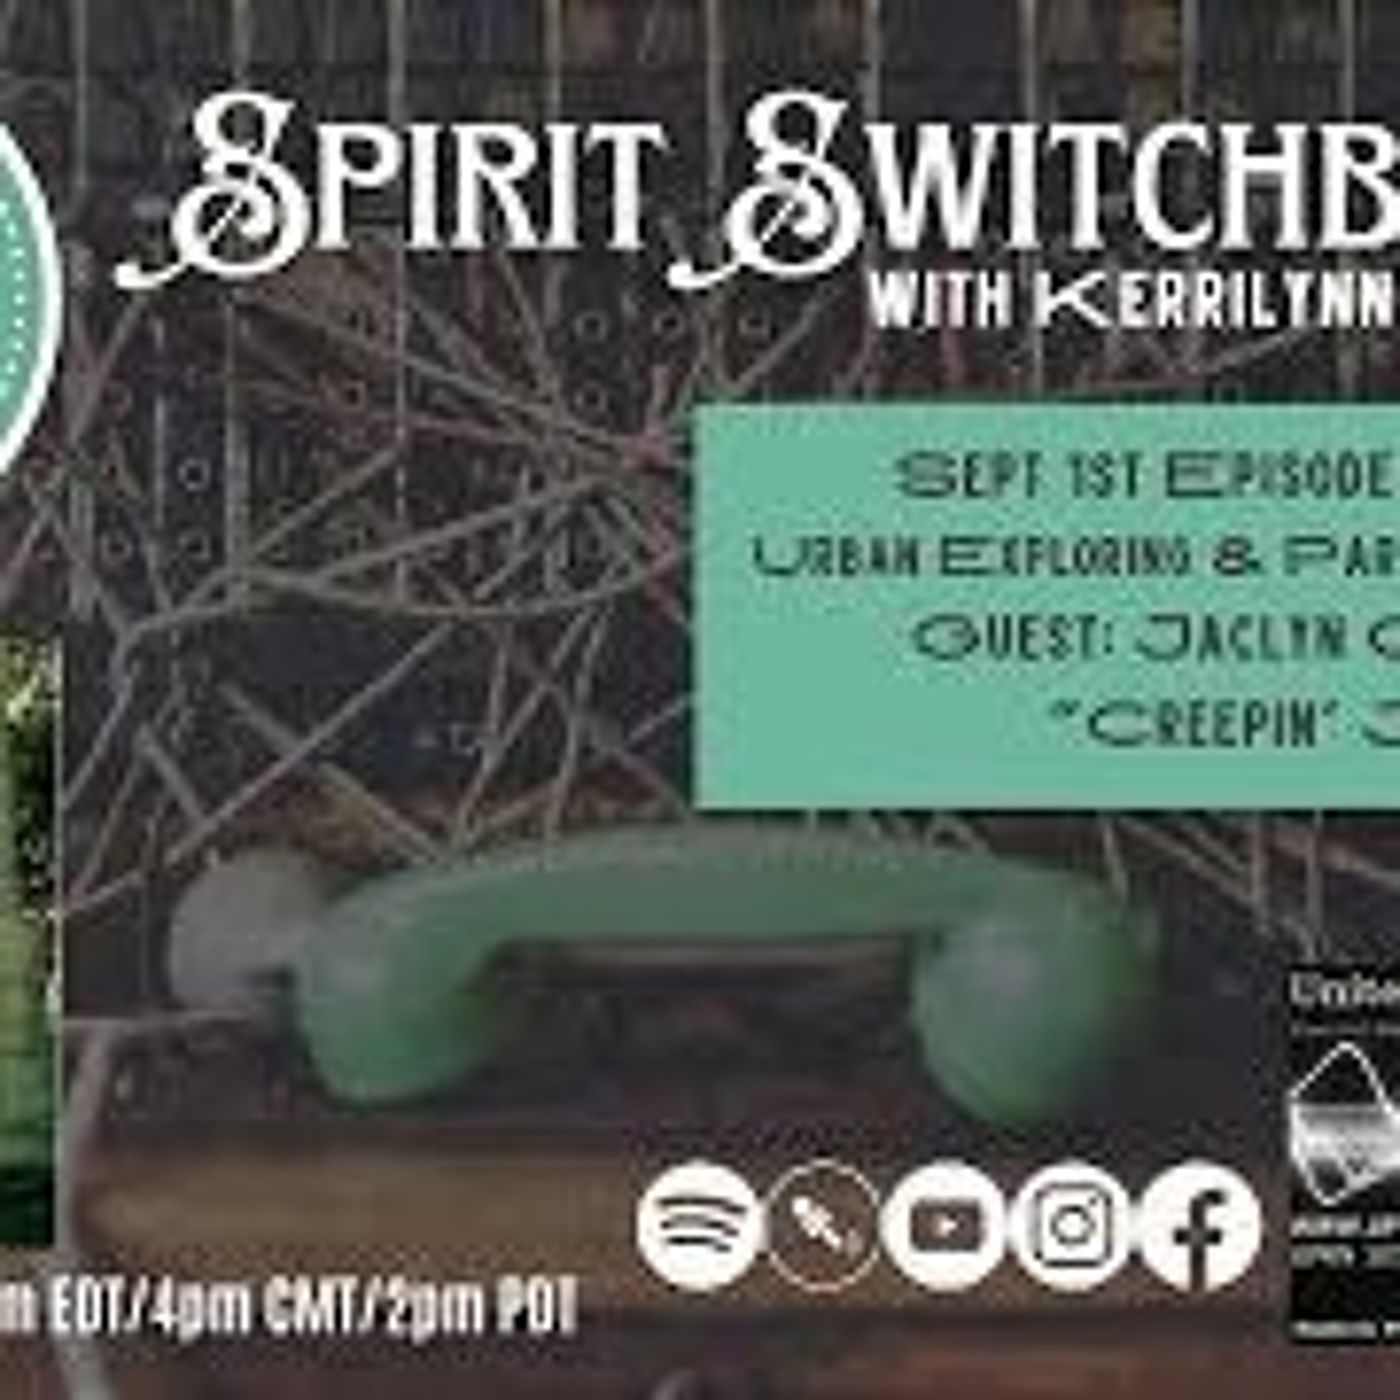 Spirit Switchboard Welcomes Jaclyn Goldman, Urban Exploring&Paranormal - Sept 1,2023